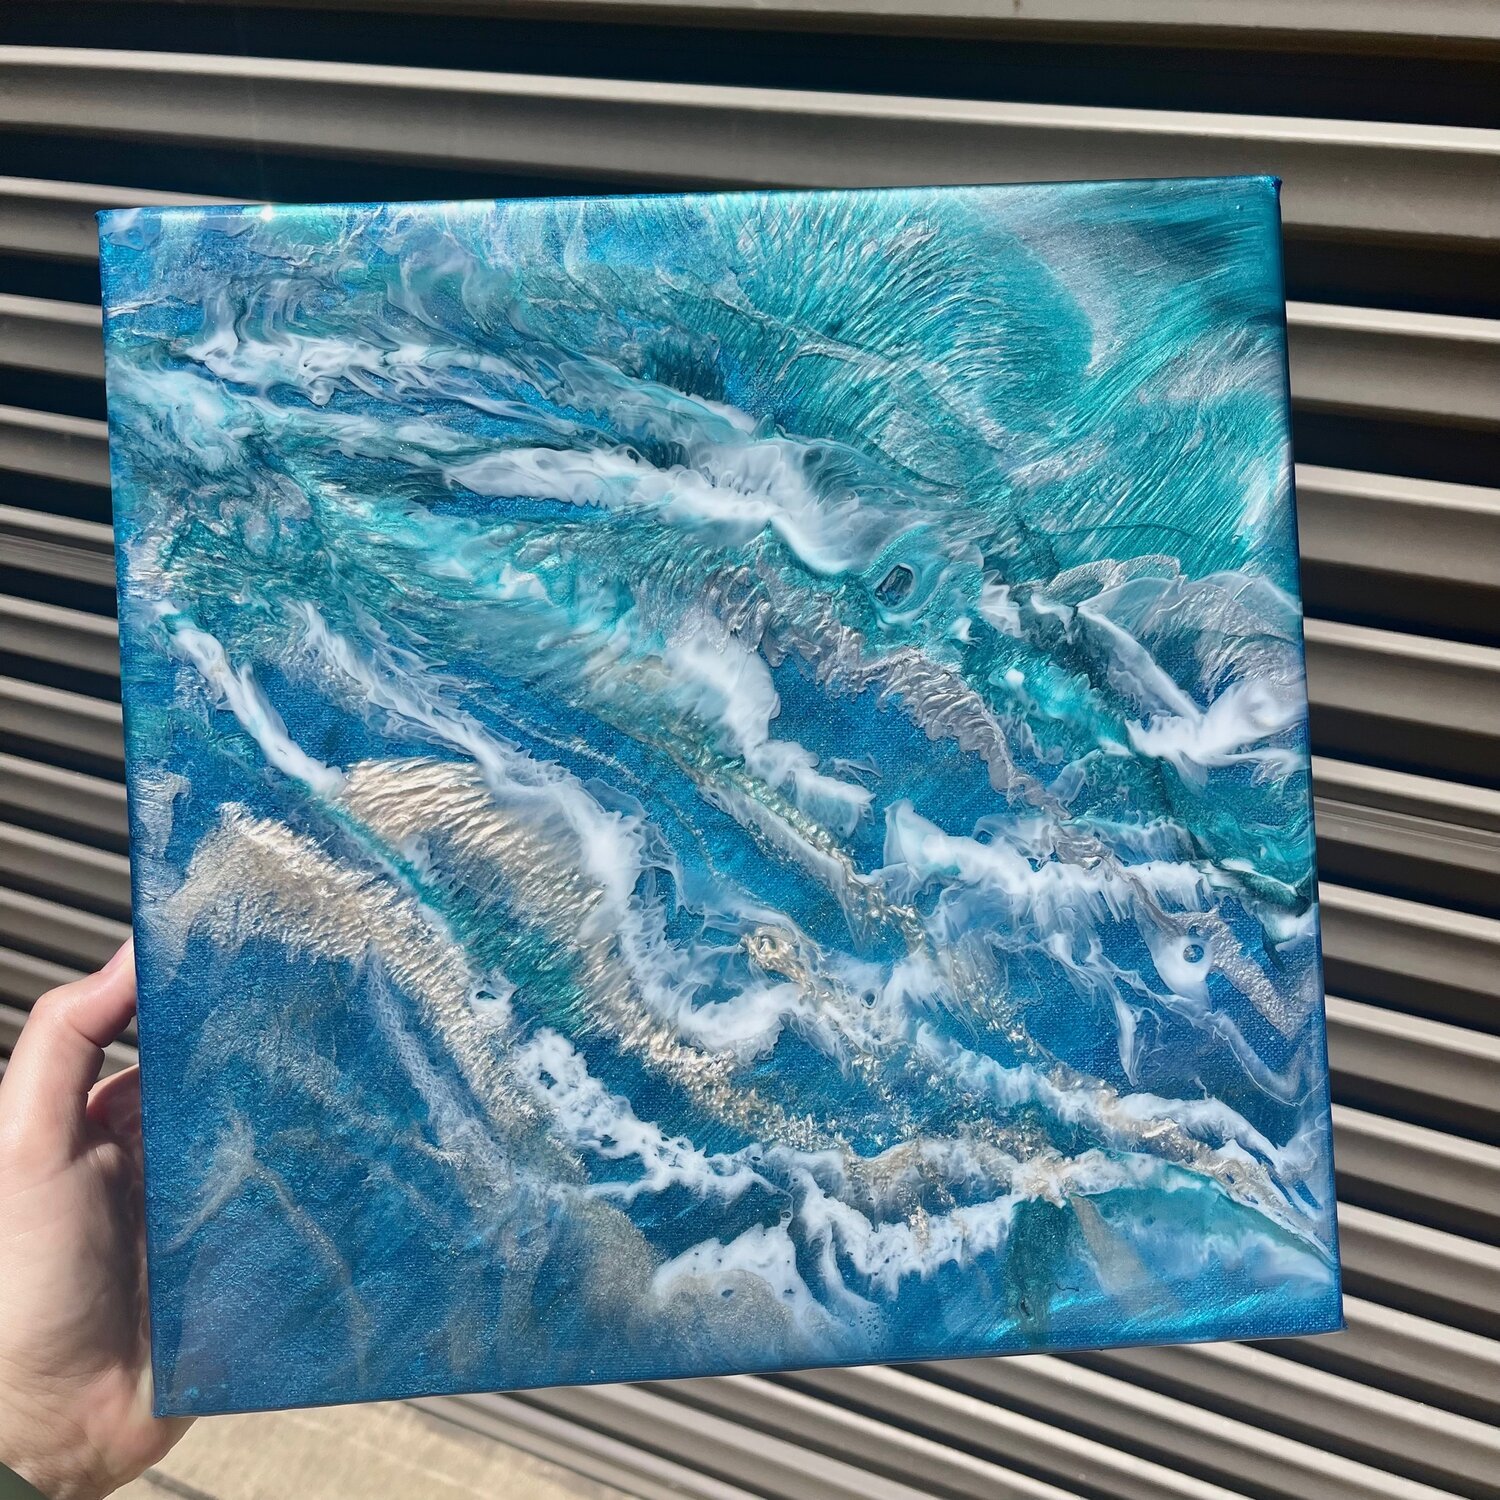 Resin artwork. Ocean landscape. Original artwork by Brenda Stone Art.